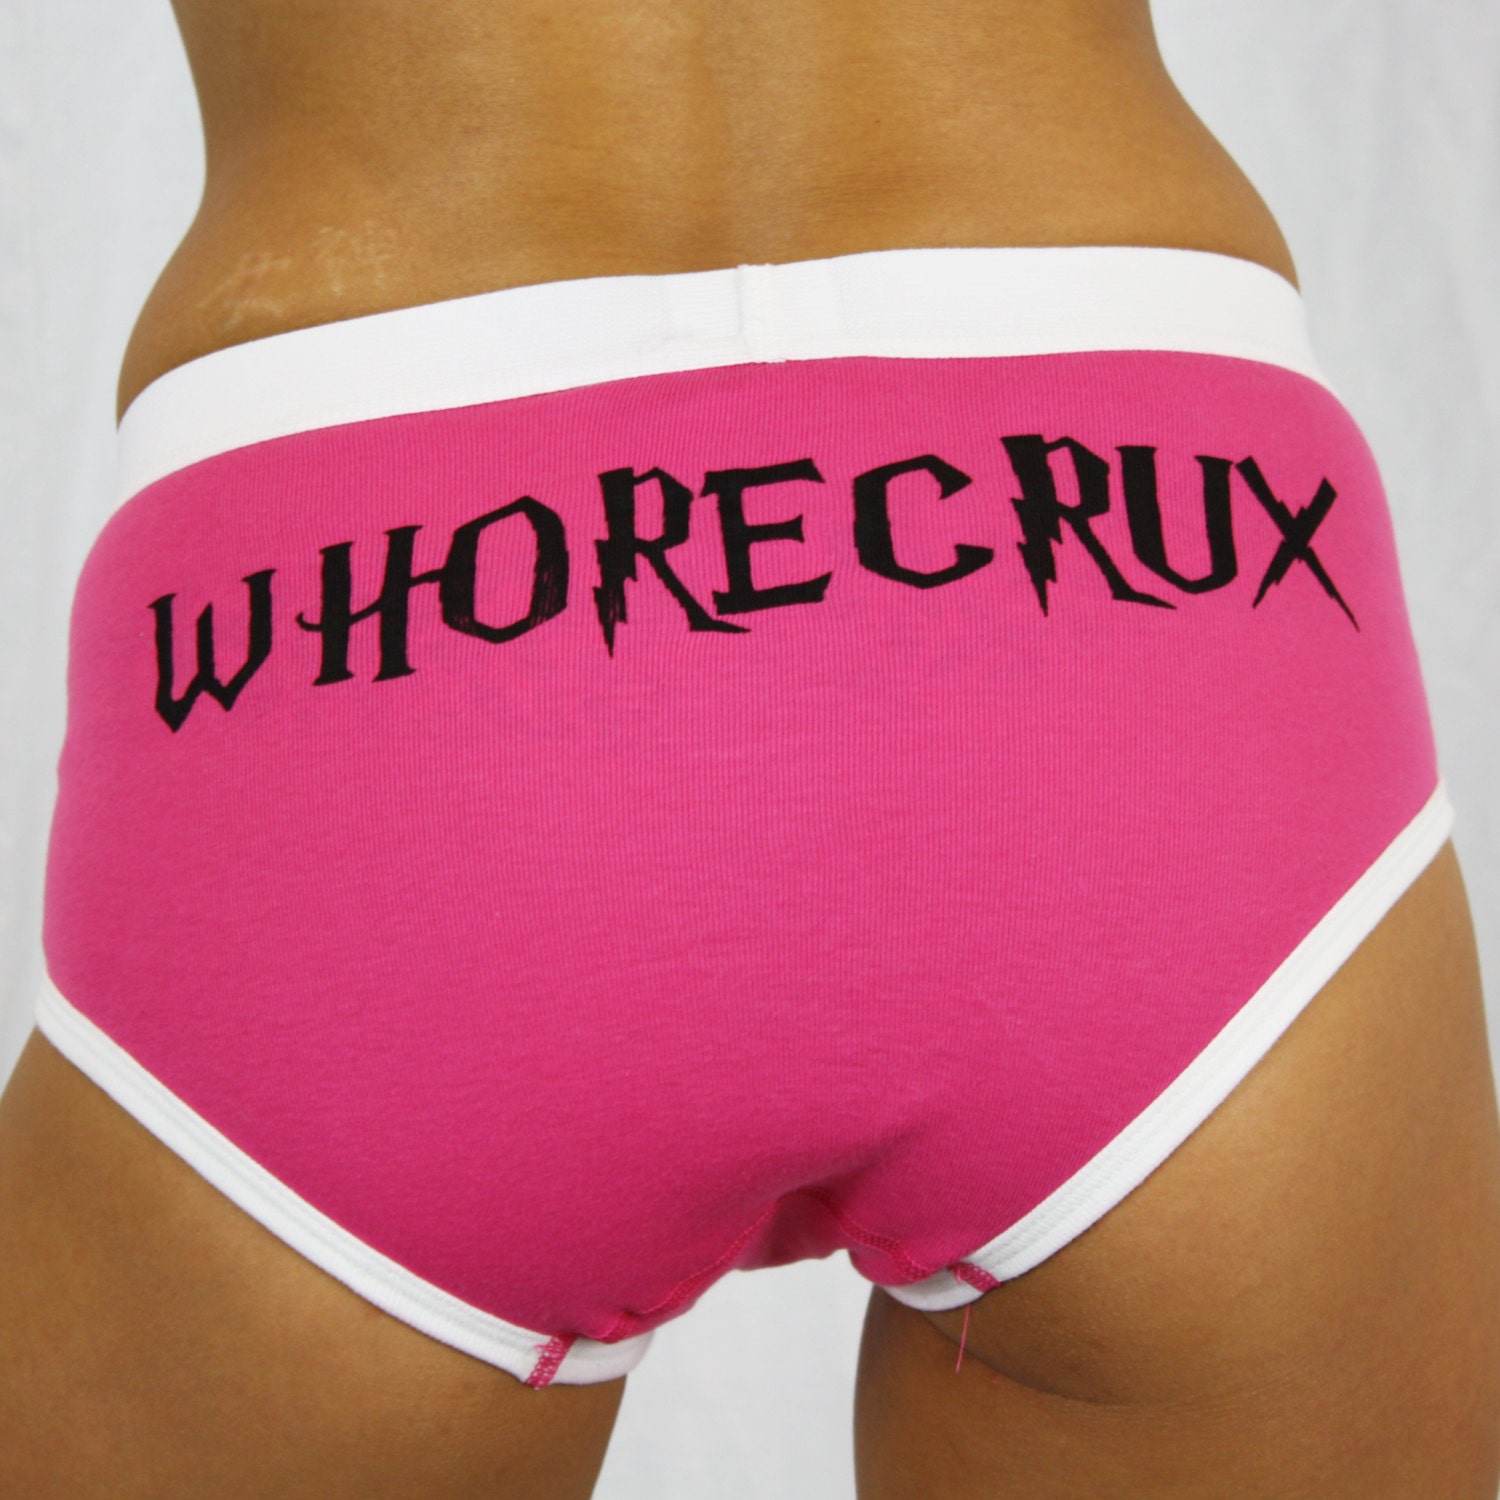 Whorecrux Underwear MEDIUM by NerdsWithVaginas on Etsy